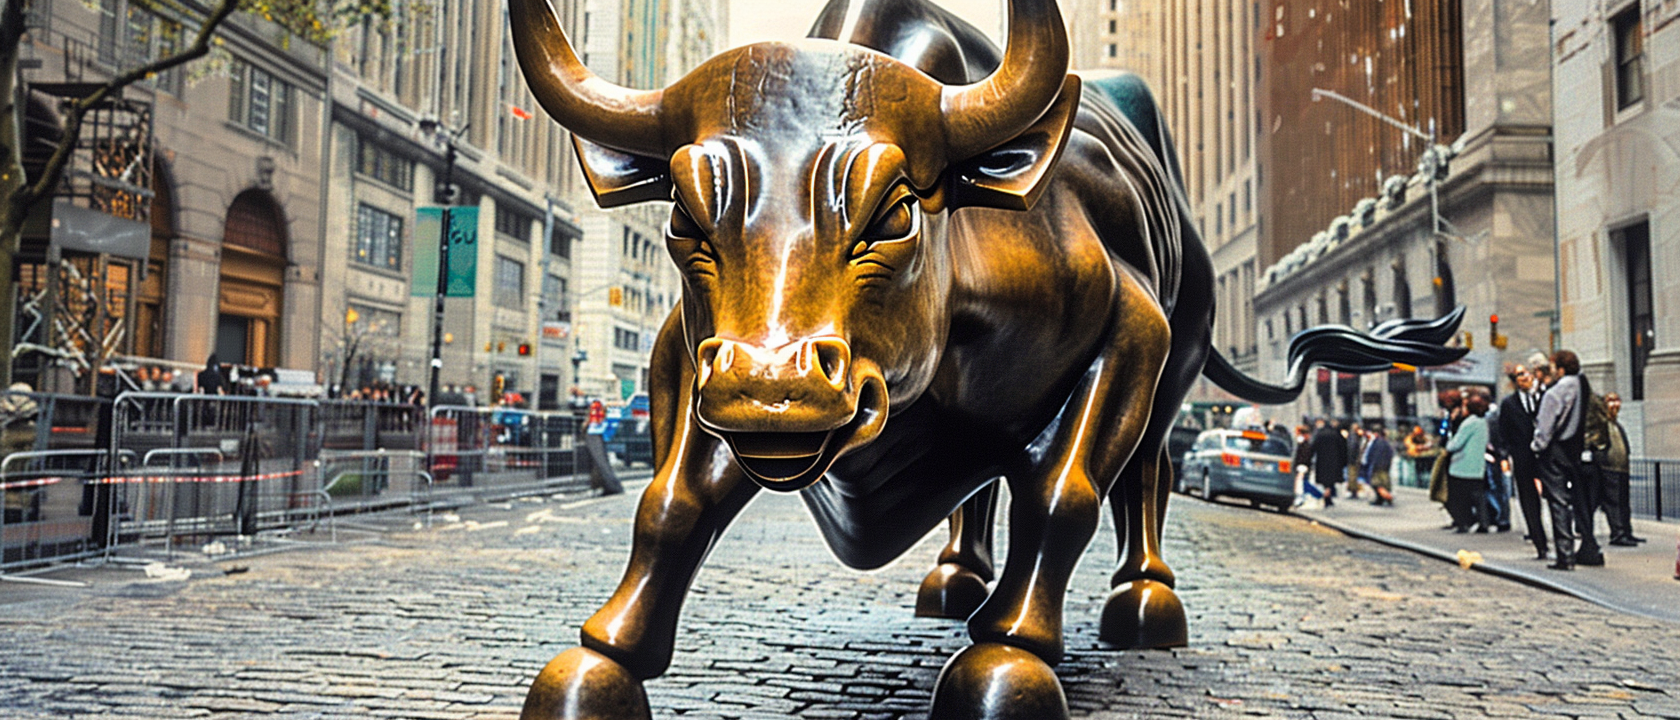 Wall Street Wakes Up to Bitcoin with James Lavish & Eric Yakes